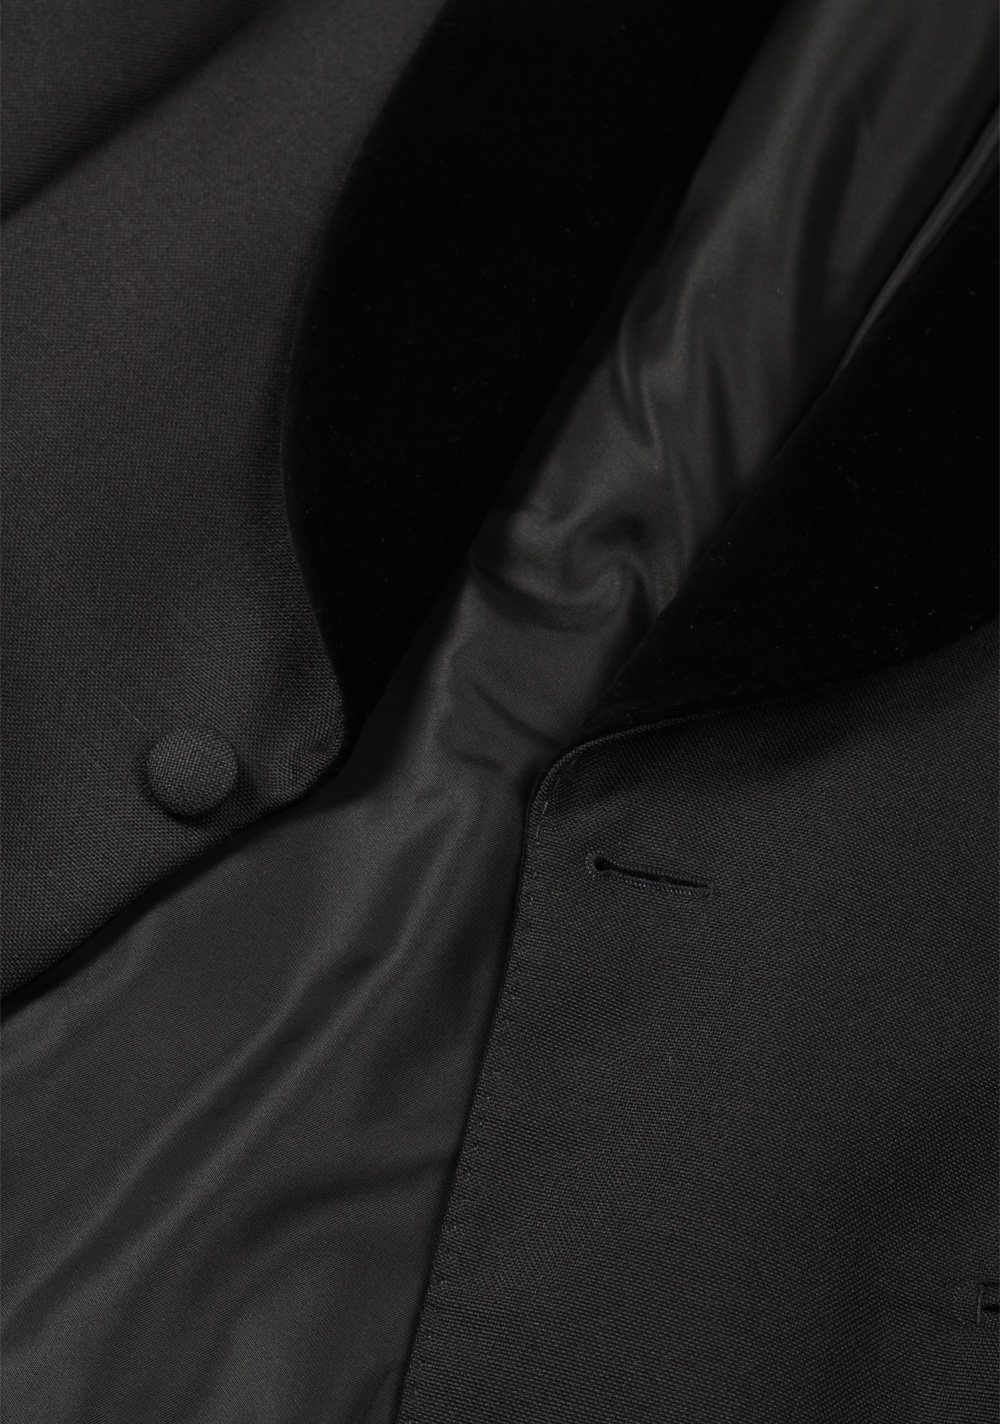 TOM FORD Shelton Shawl Collar Black Tuxedo Suit Smoking Size 48 / 38R U.S. | Costume Limité